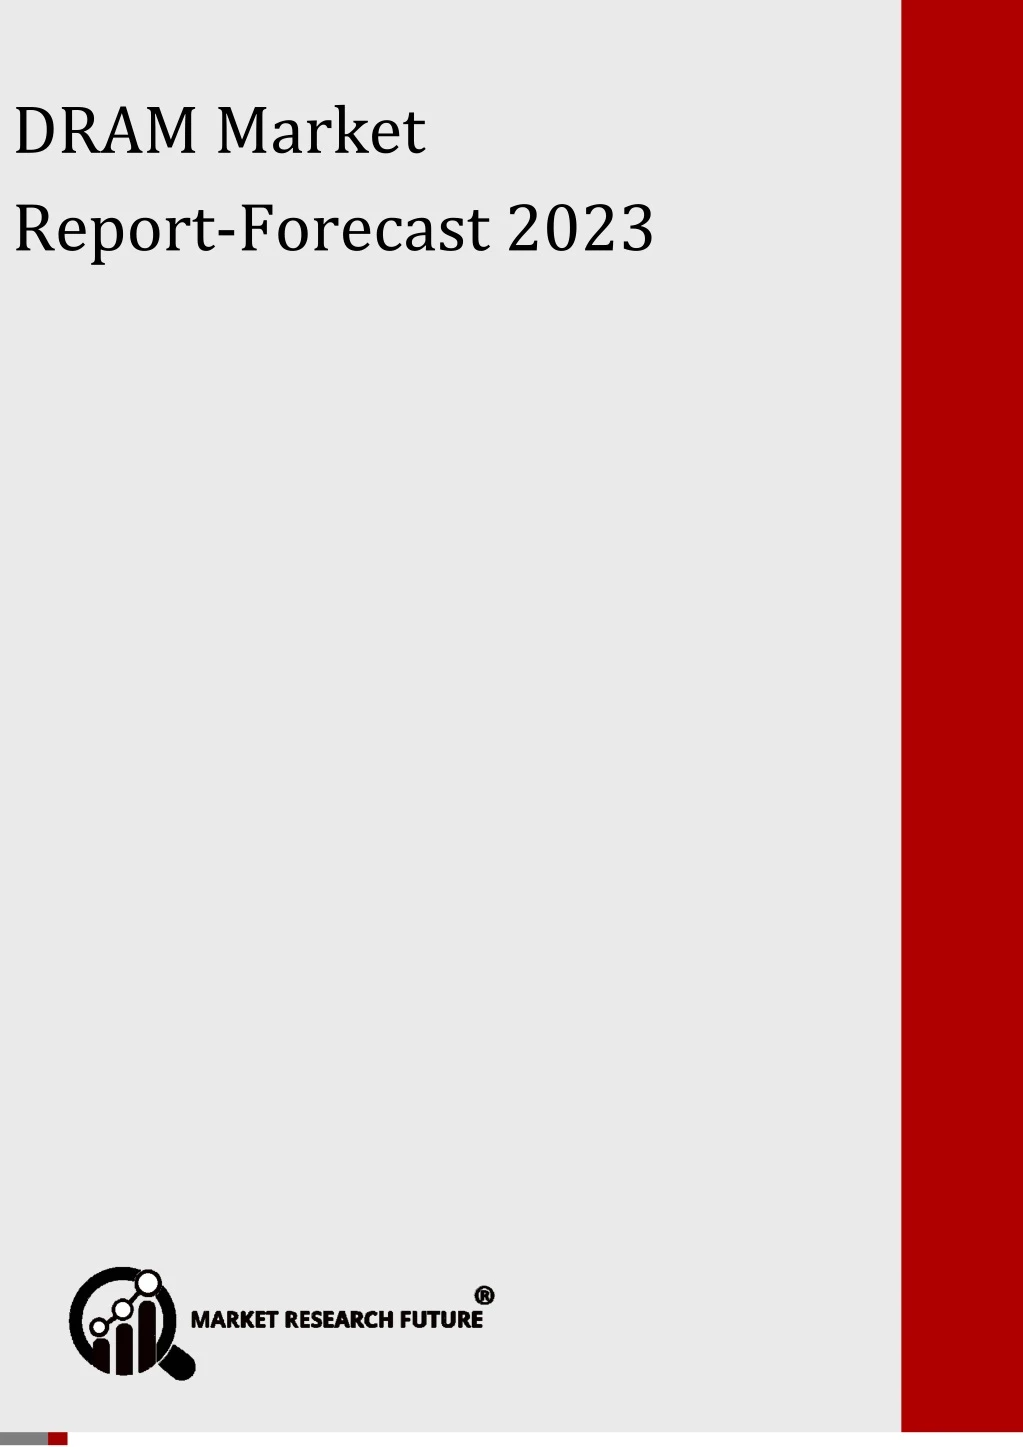 dram market forecast 2023 dram market report